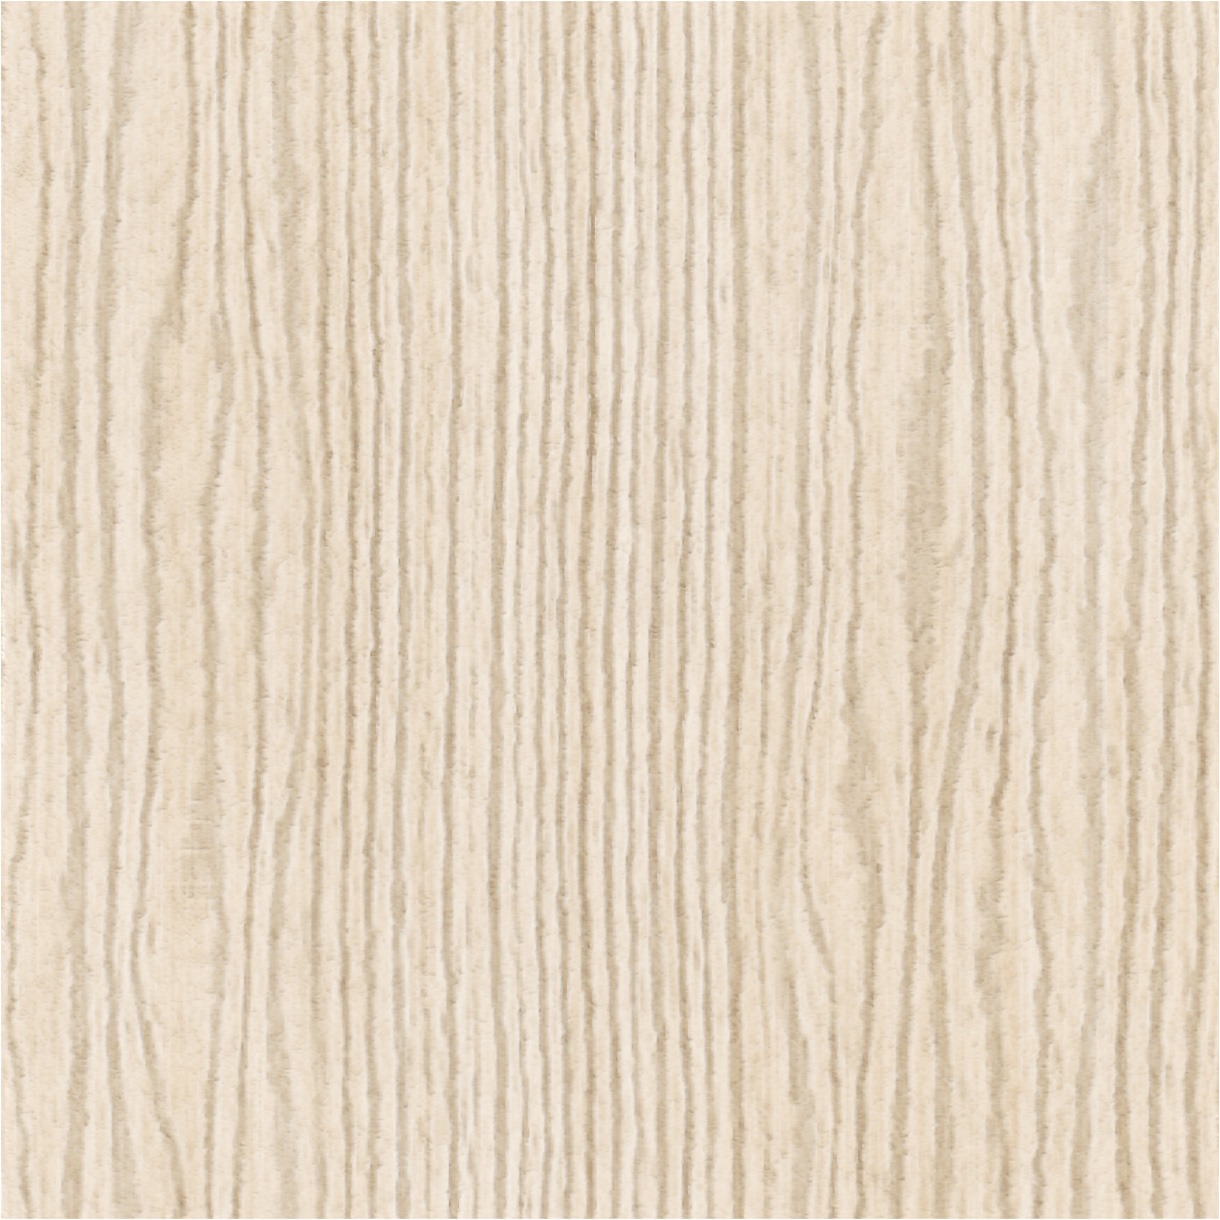 Wood: White Oak